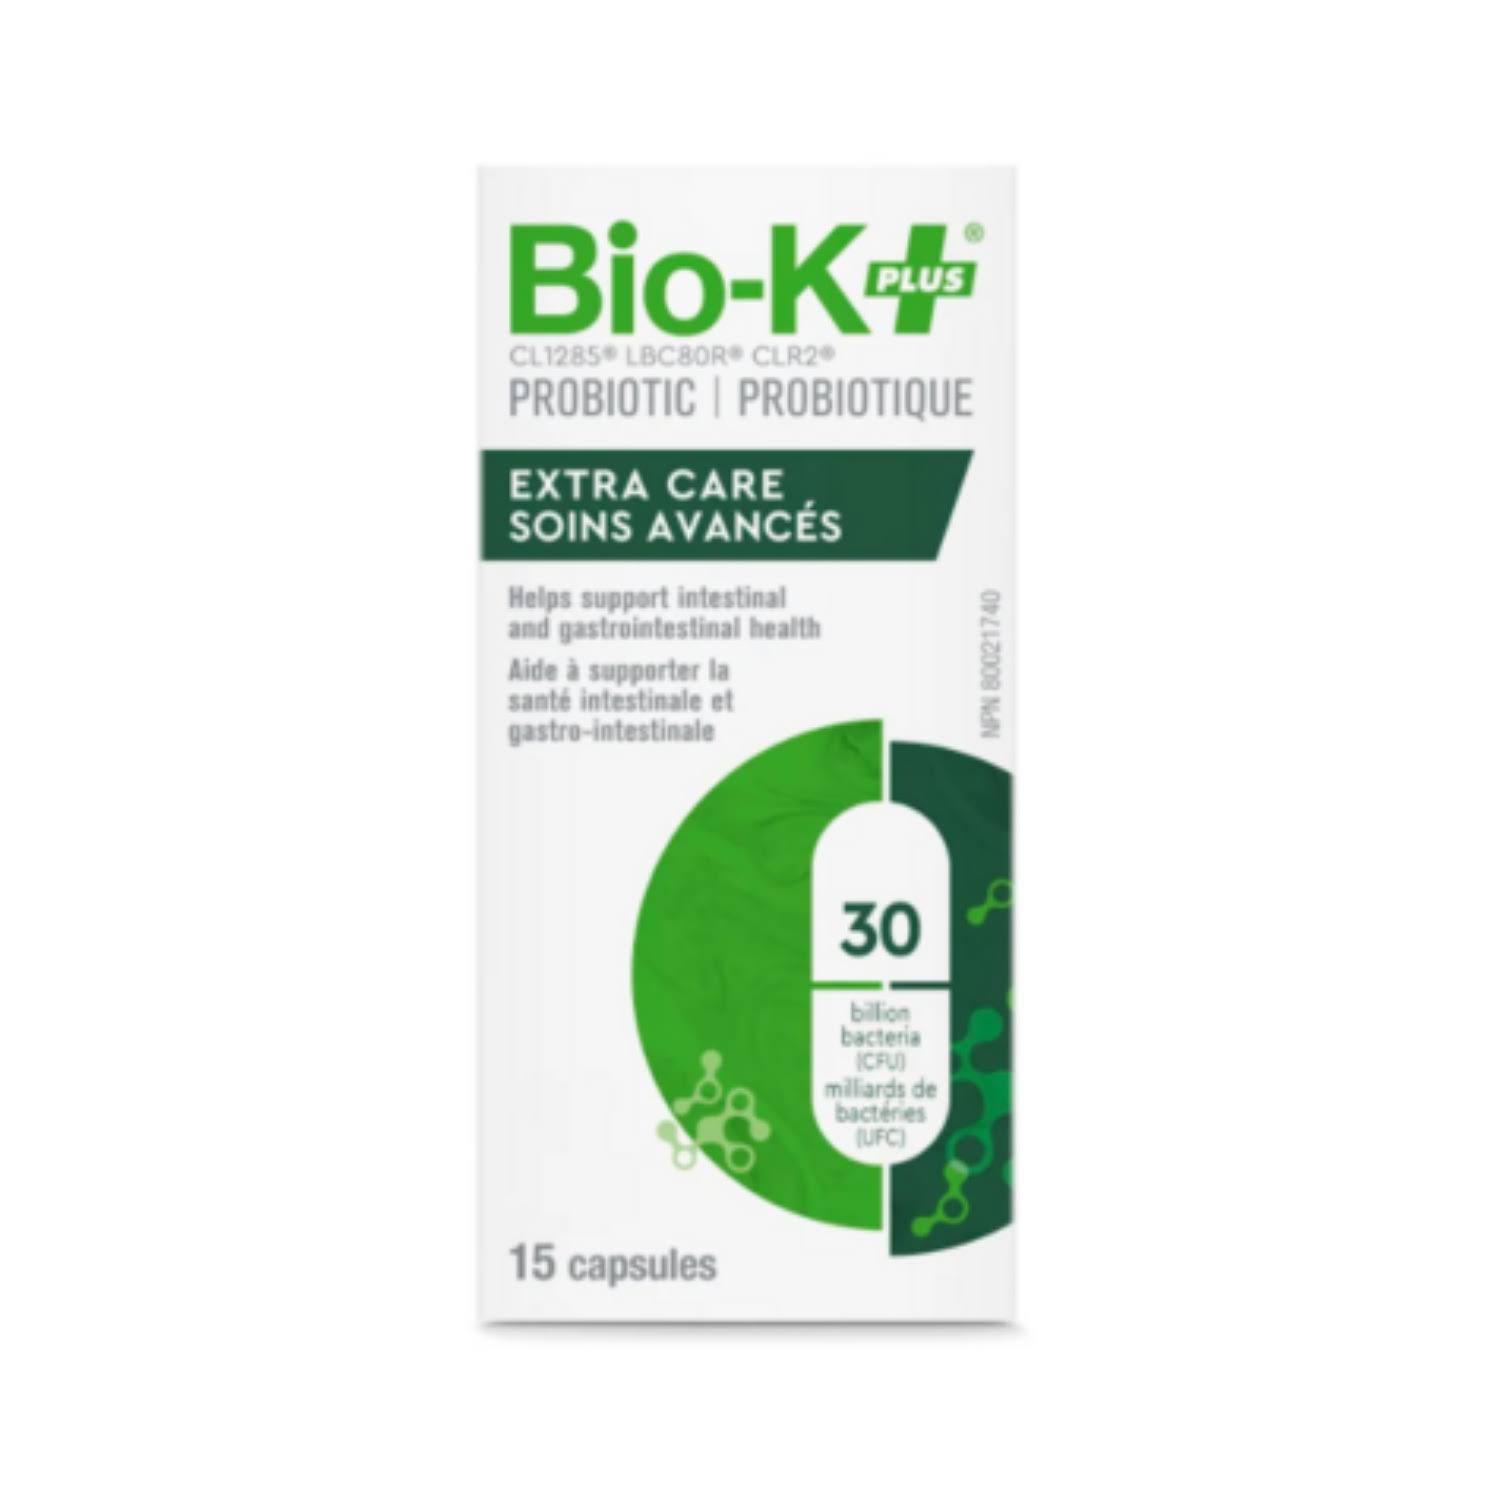 Bio-K+ Extra Care 30 Billion